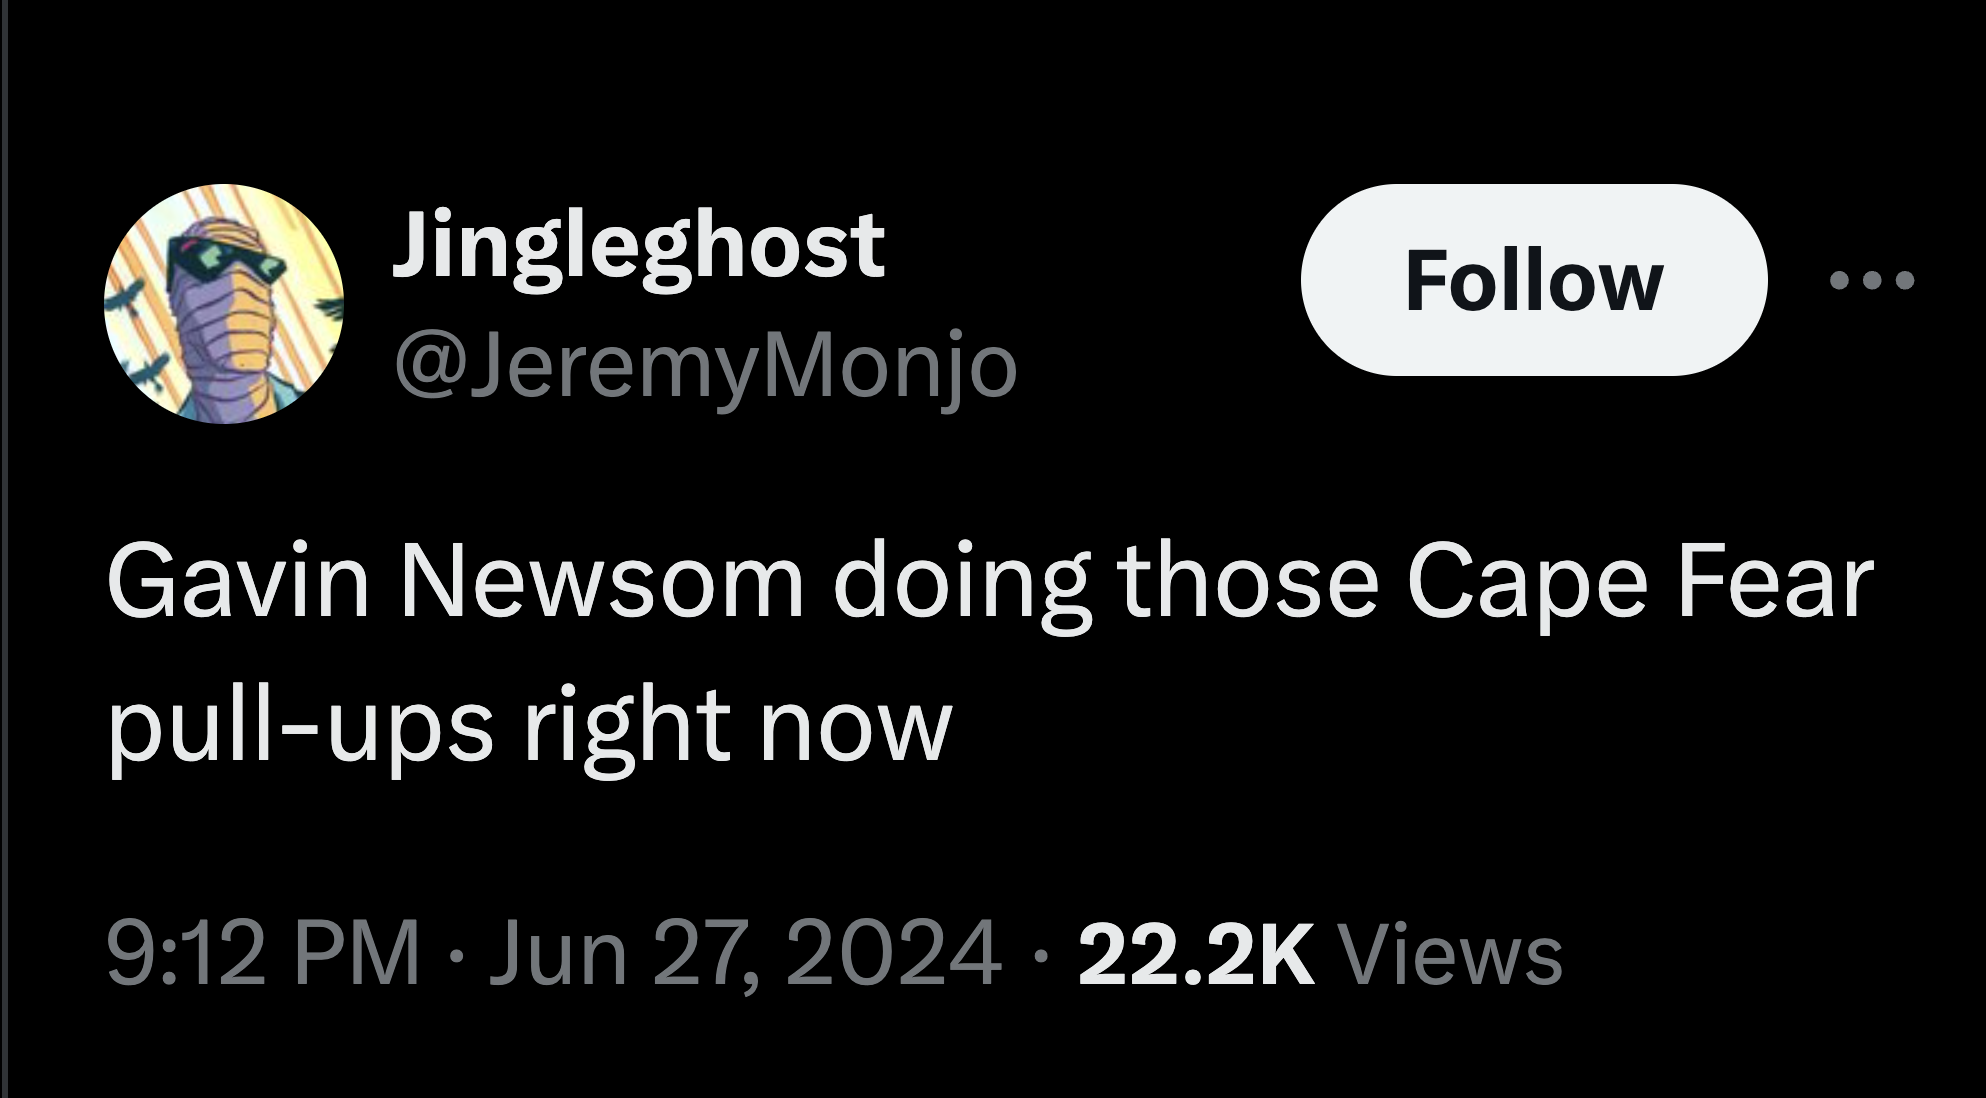 parallel - Jingleghost Gavin Newsom doing those Cape Fear pullups right now Views